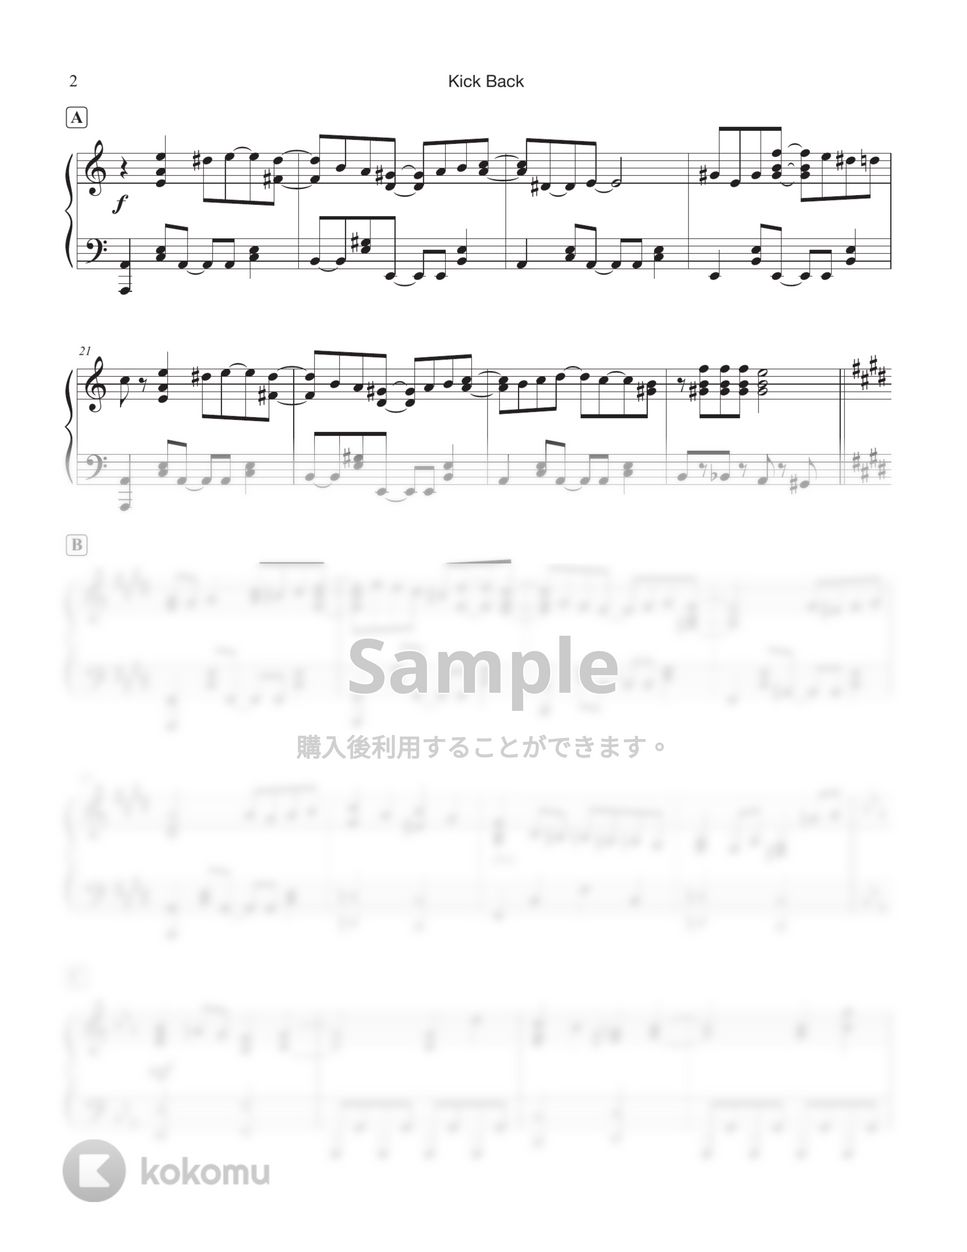 米津玄師 (鏈鋸人 OP) - Kick Back (Original + Easy key) by Tully Piano